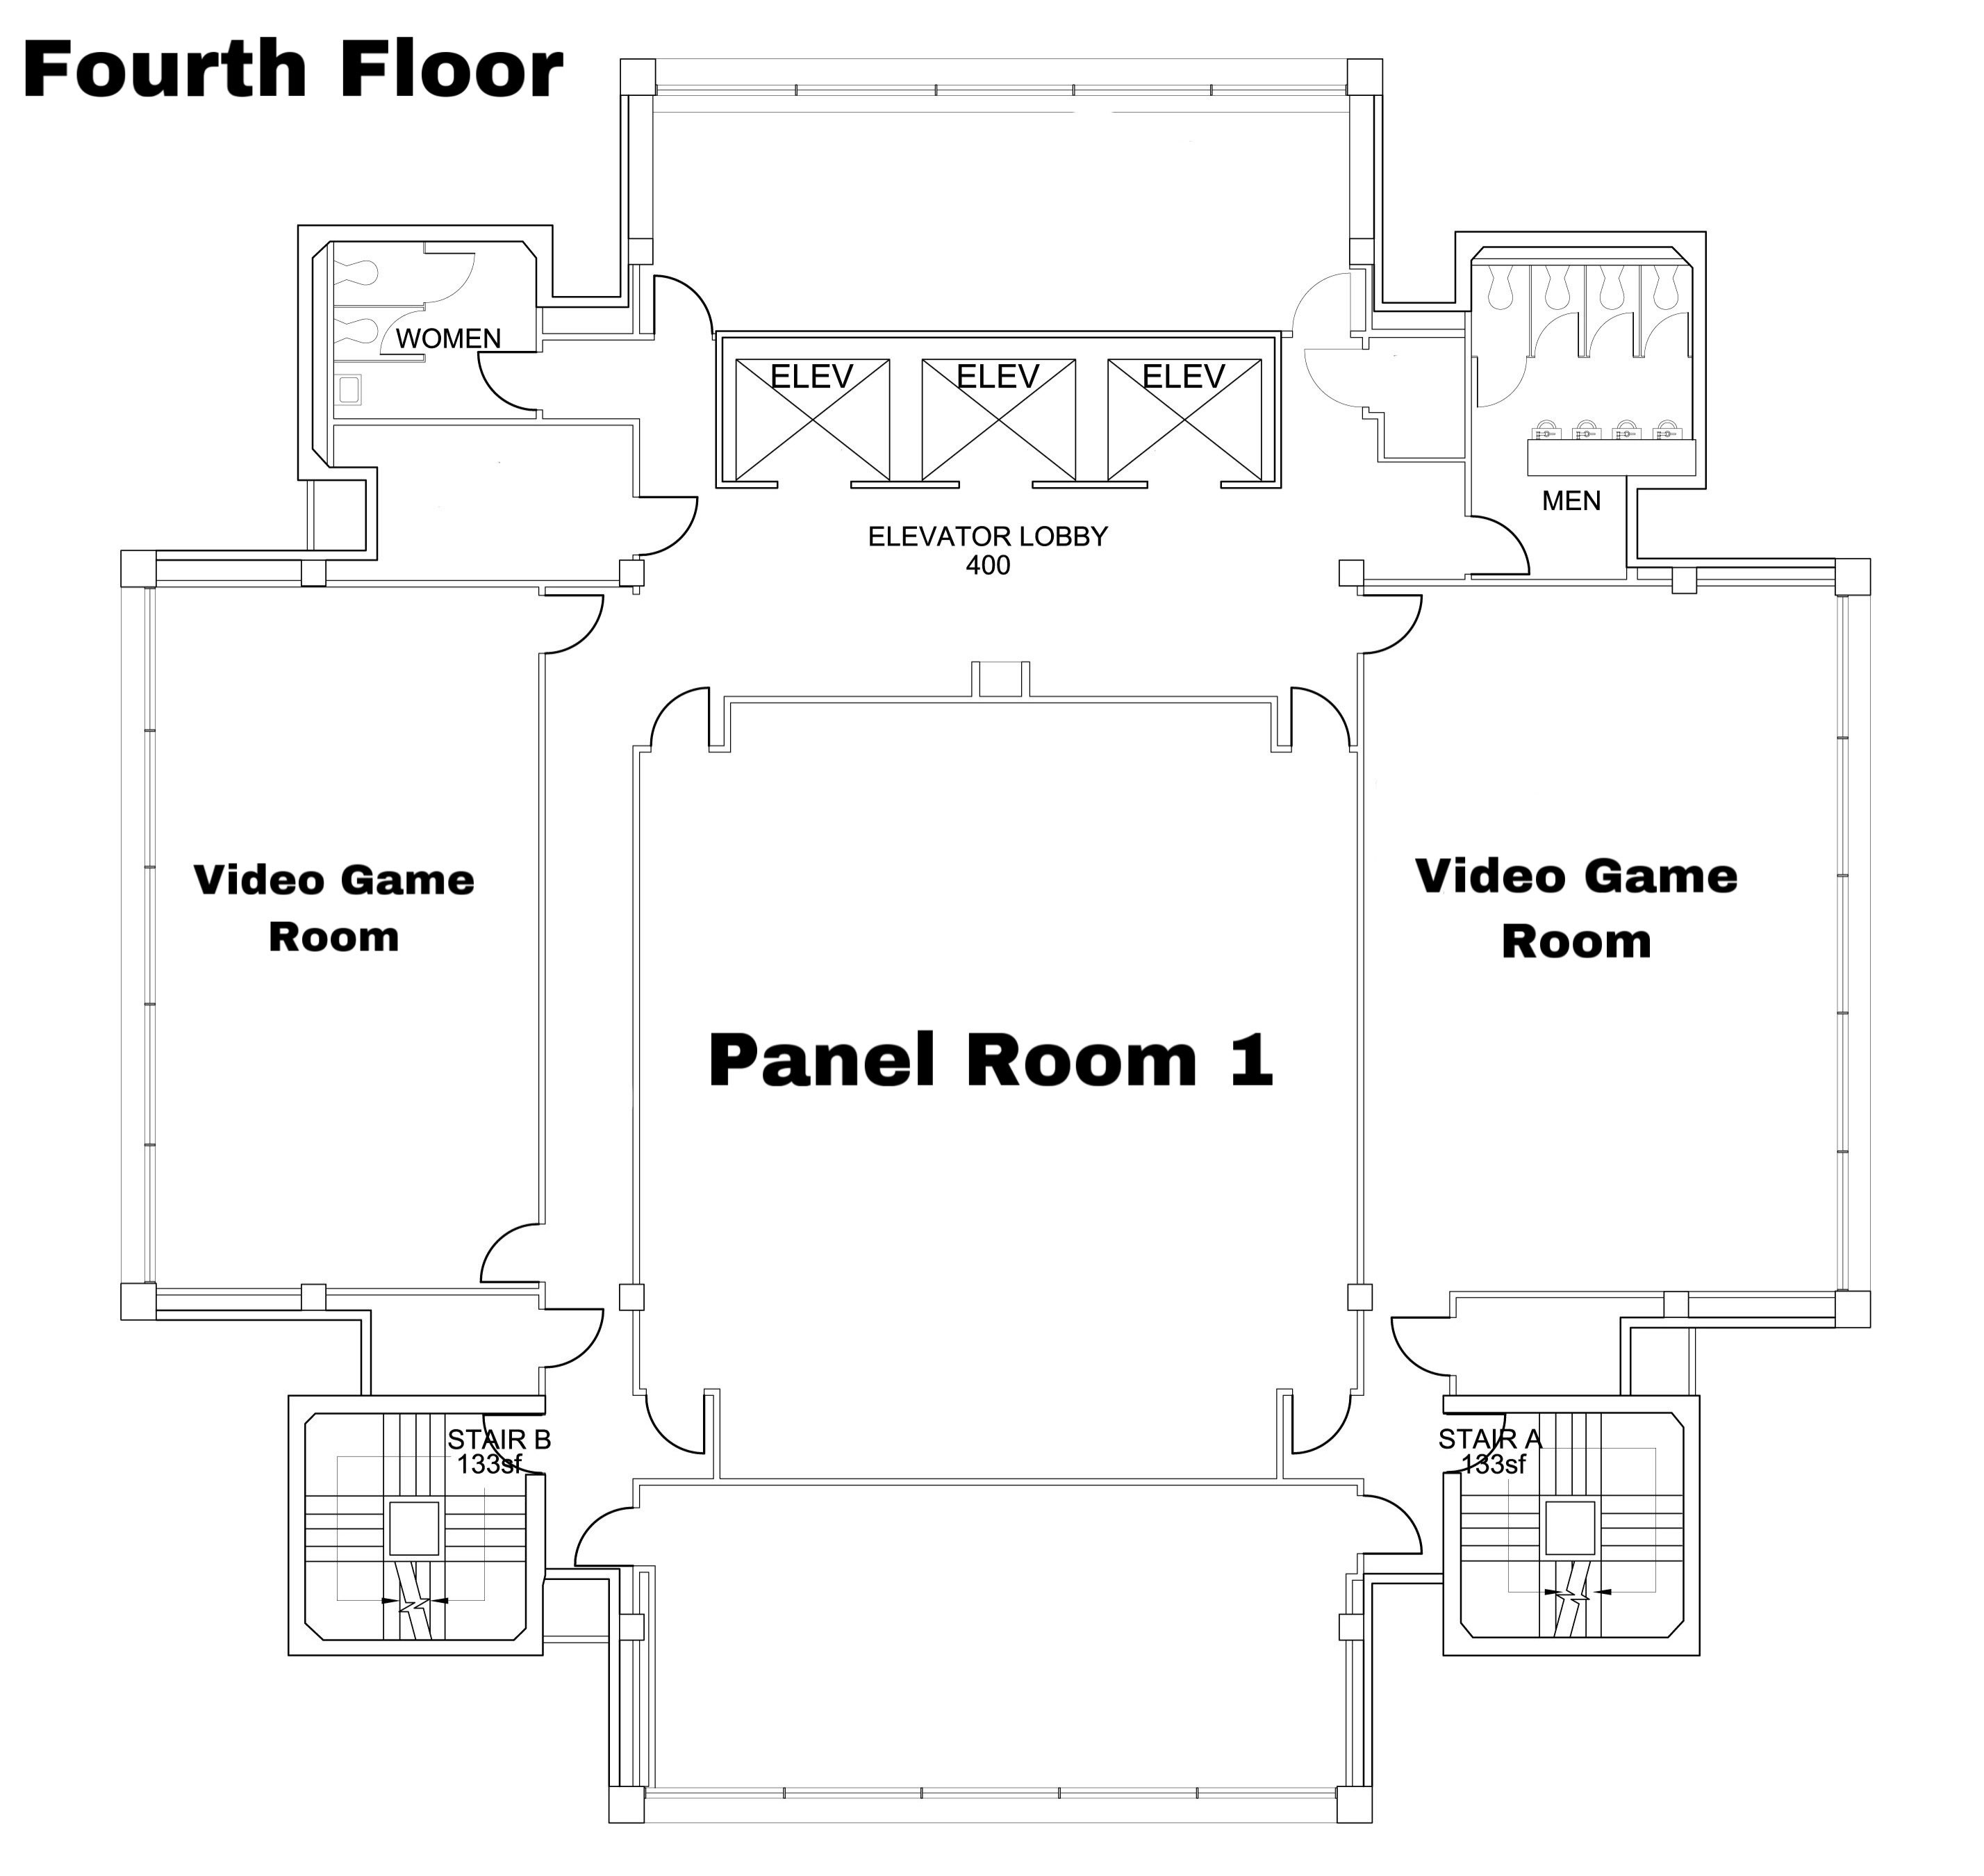 Fourth floor